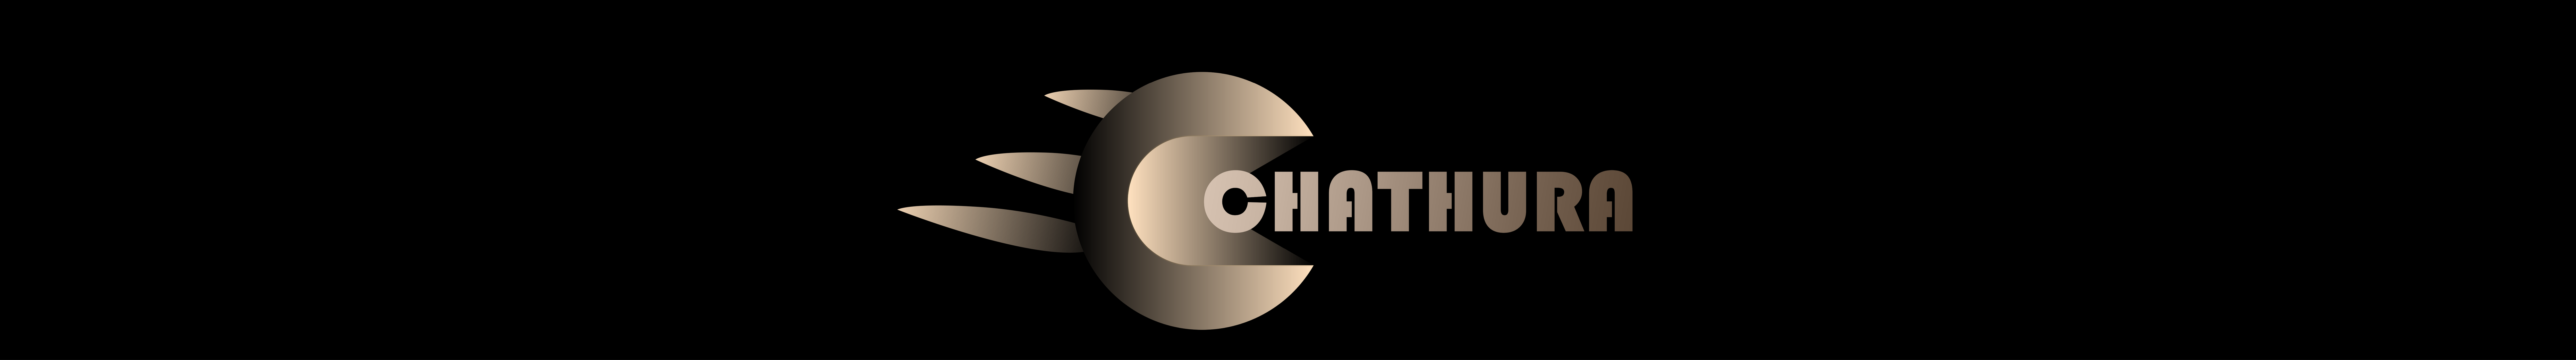 Chathura Hettiarachchi profil başlığı